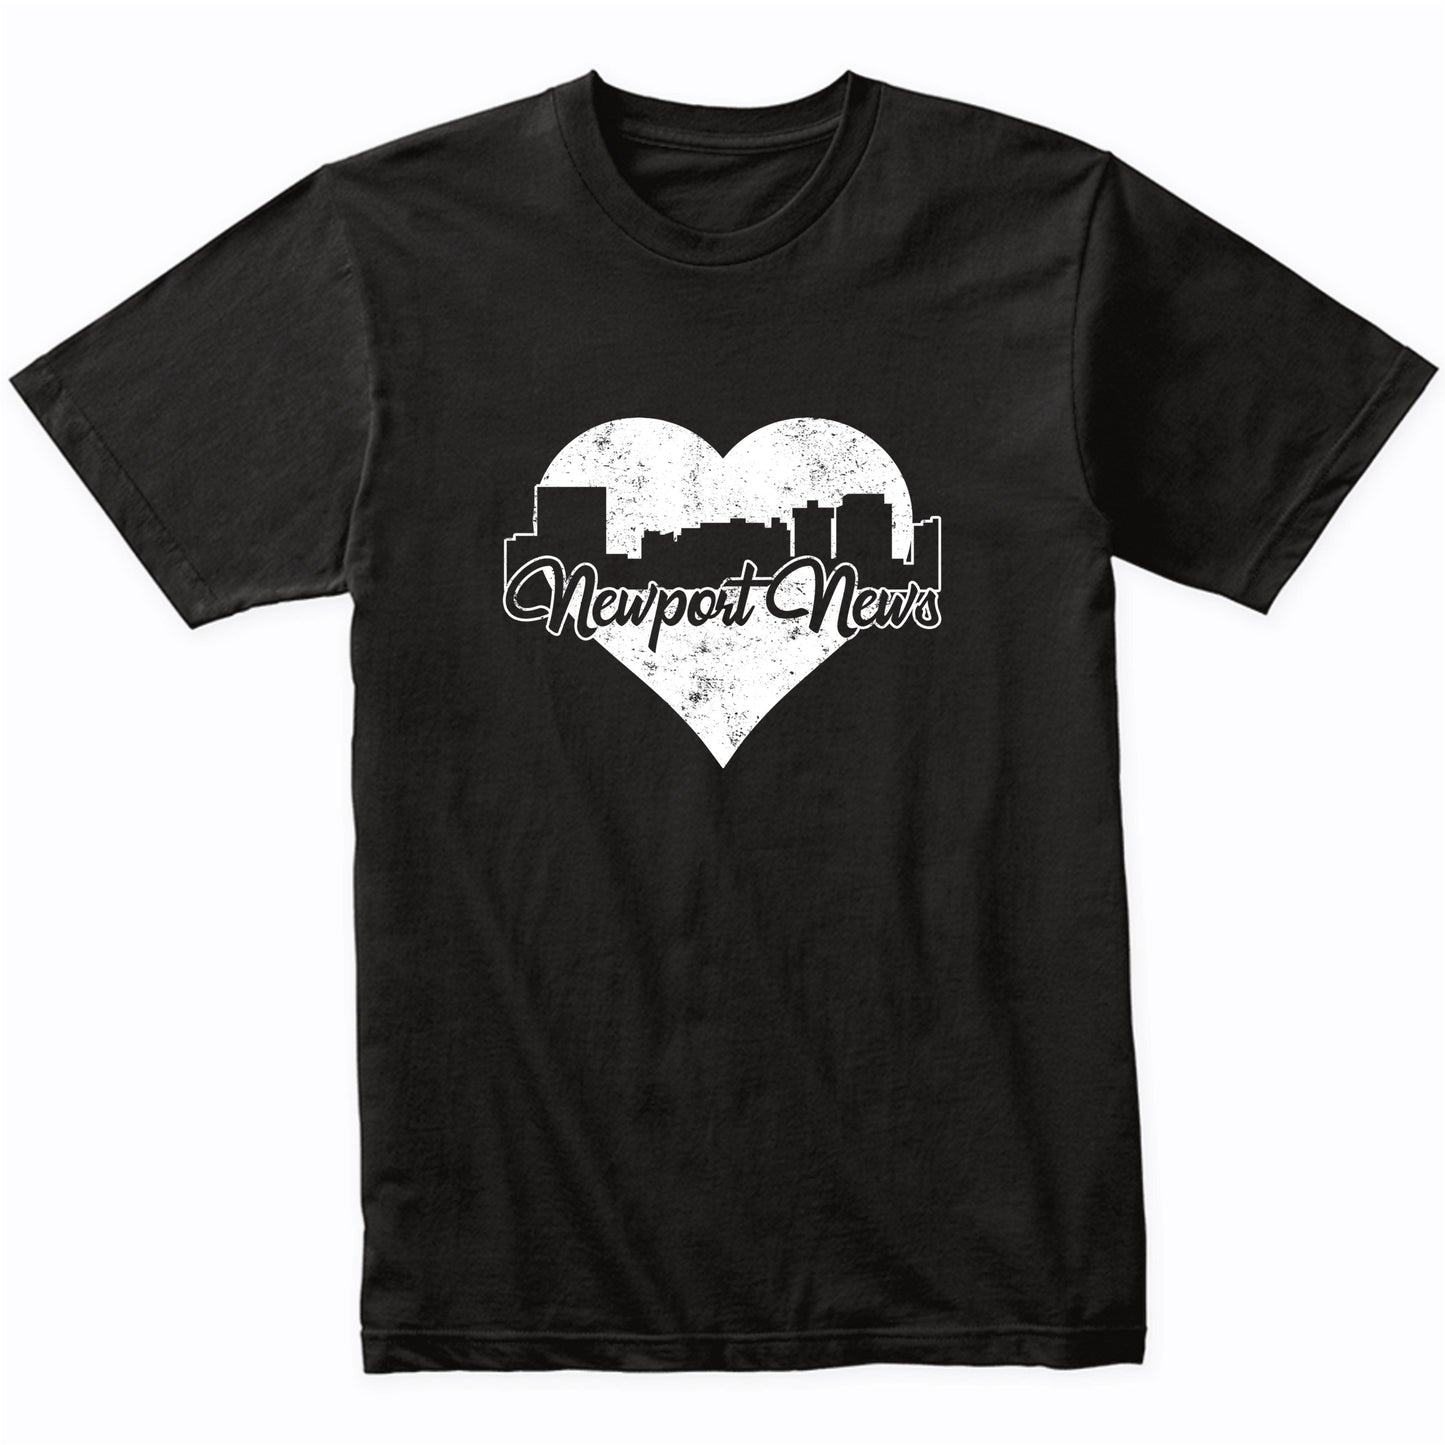 Retro Newport News Virginia Skyline Heart Distressed T-Shirt